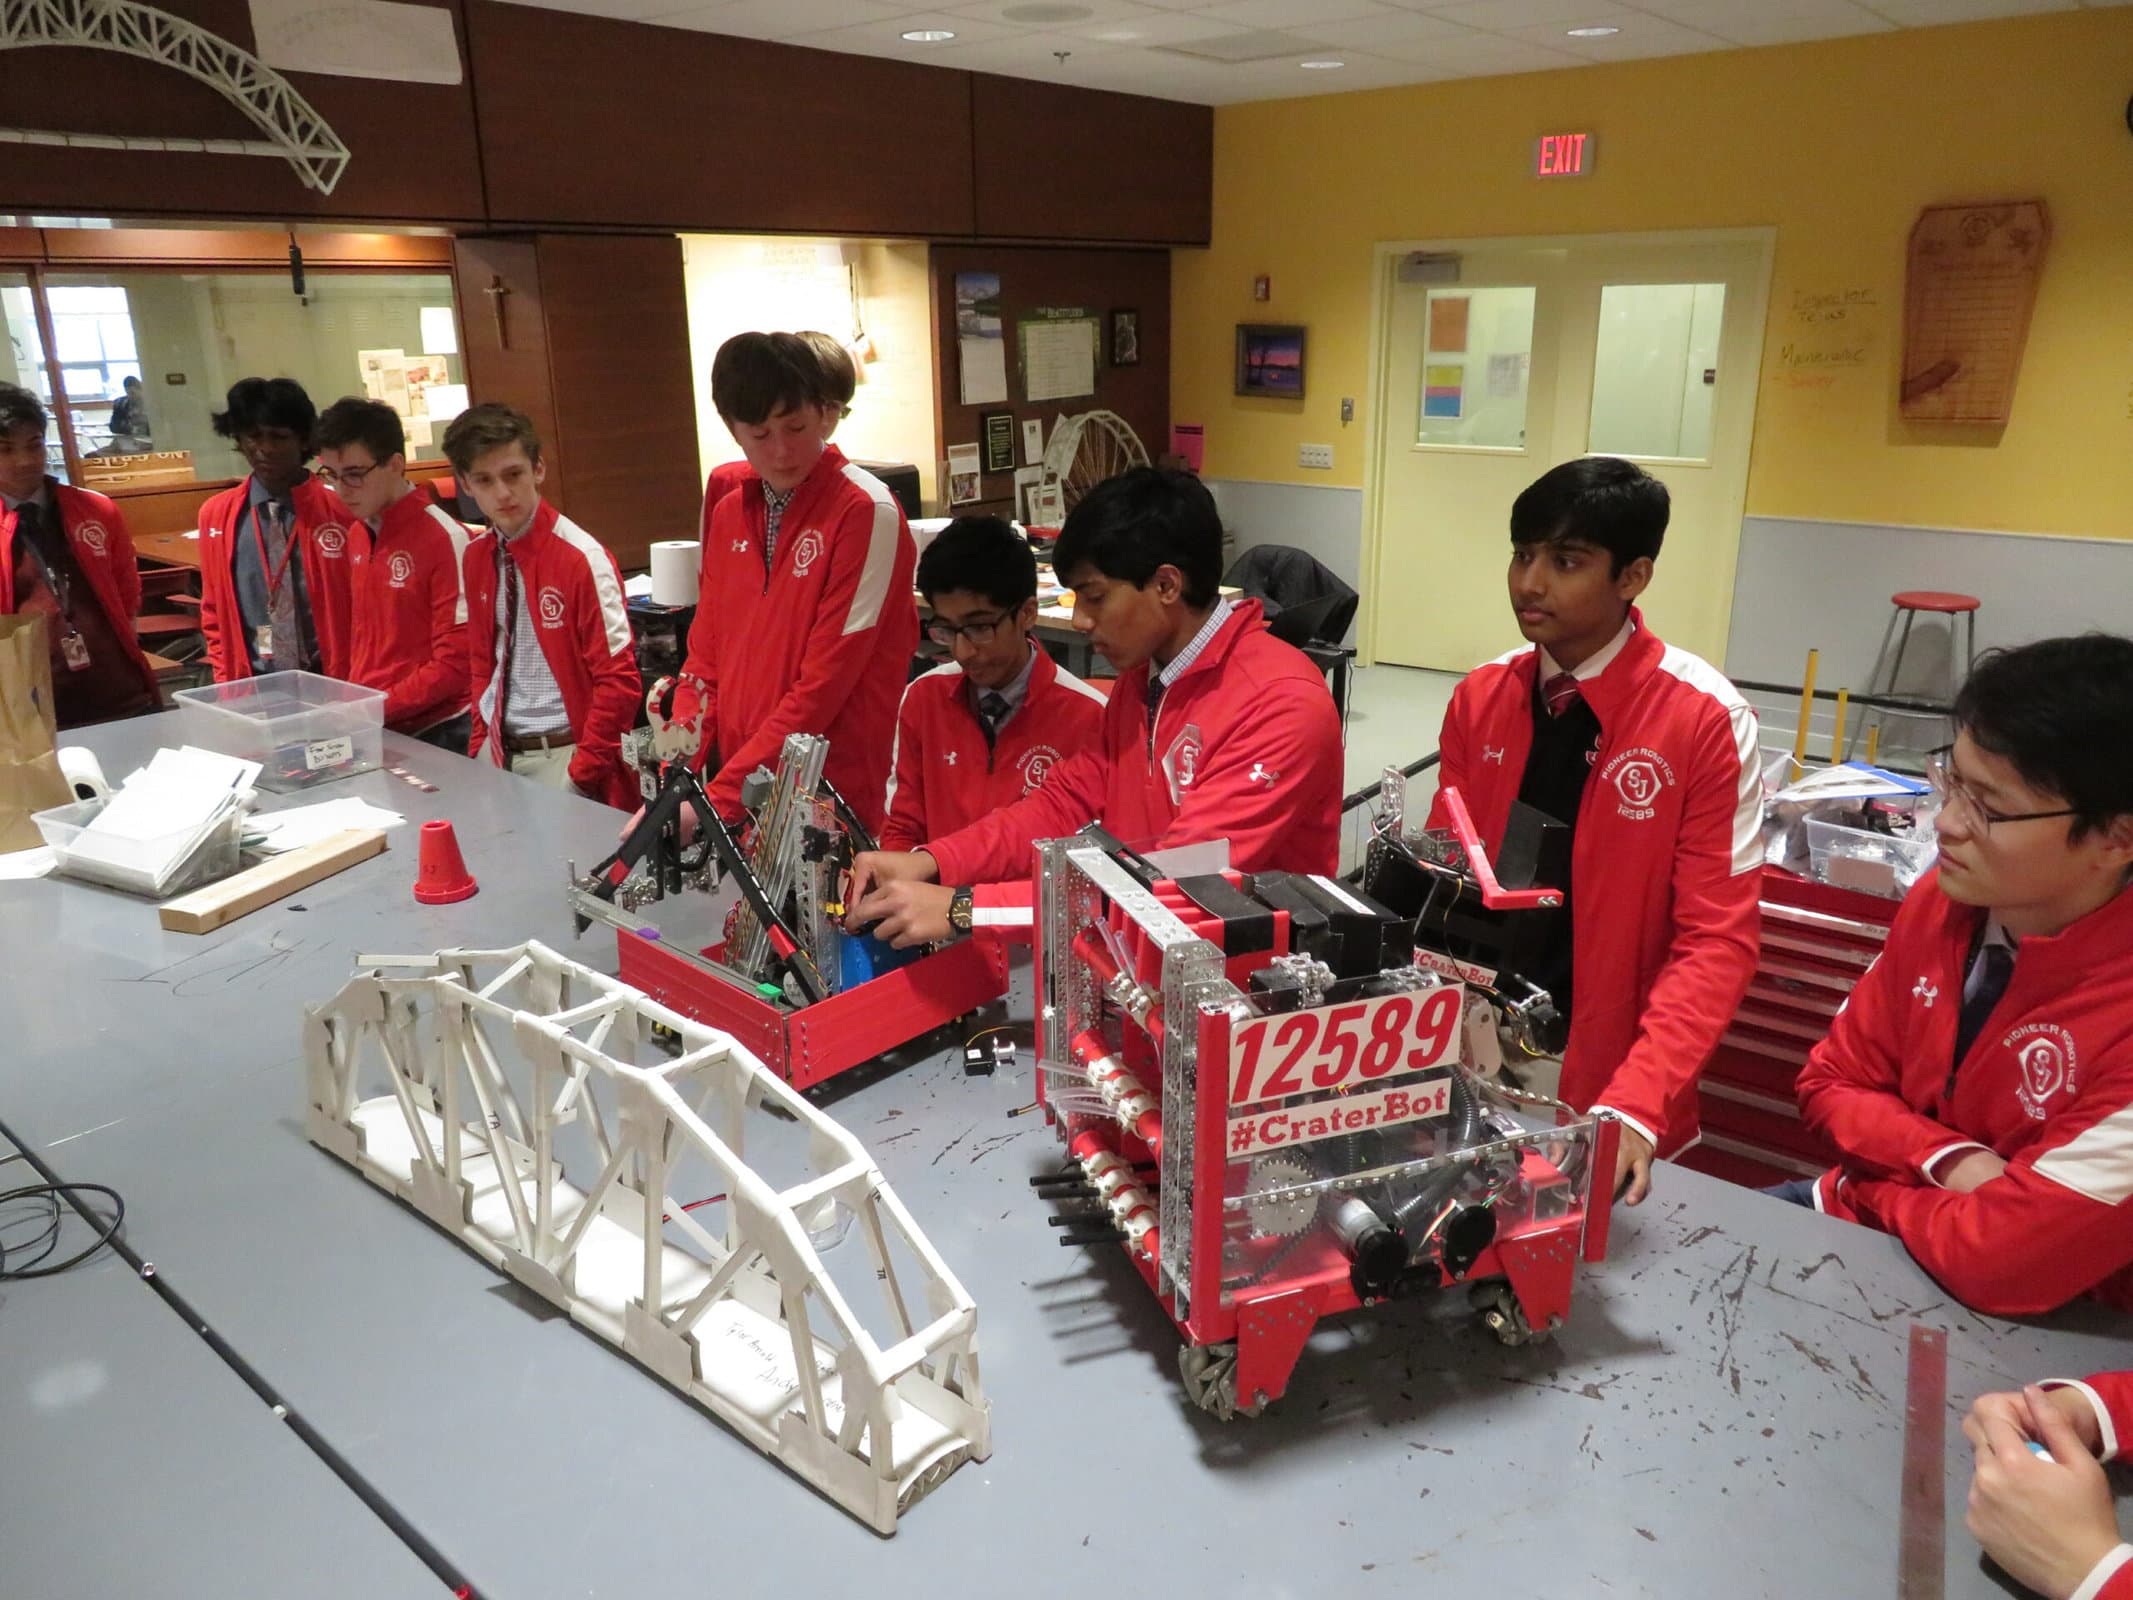 Saint John’s students lead the way in robotics